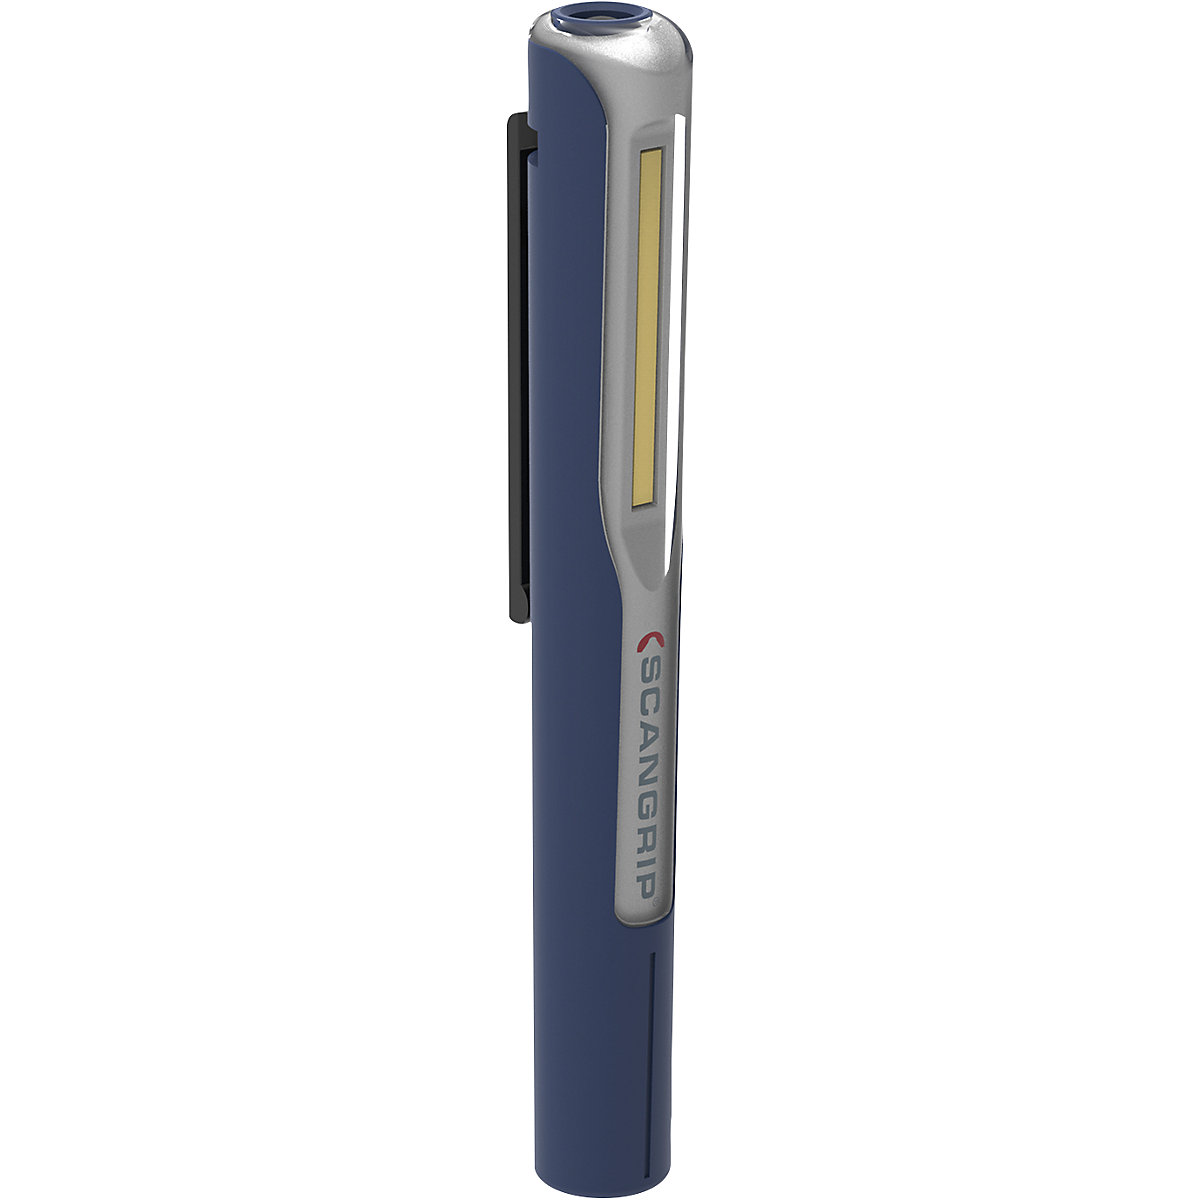 Akumulatorowa latarka długopisowa LED MAG PEN 3 – SCANGRIP (Zdjęcie produktu 3)-2